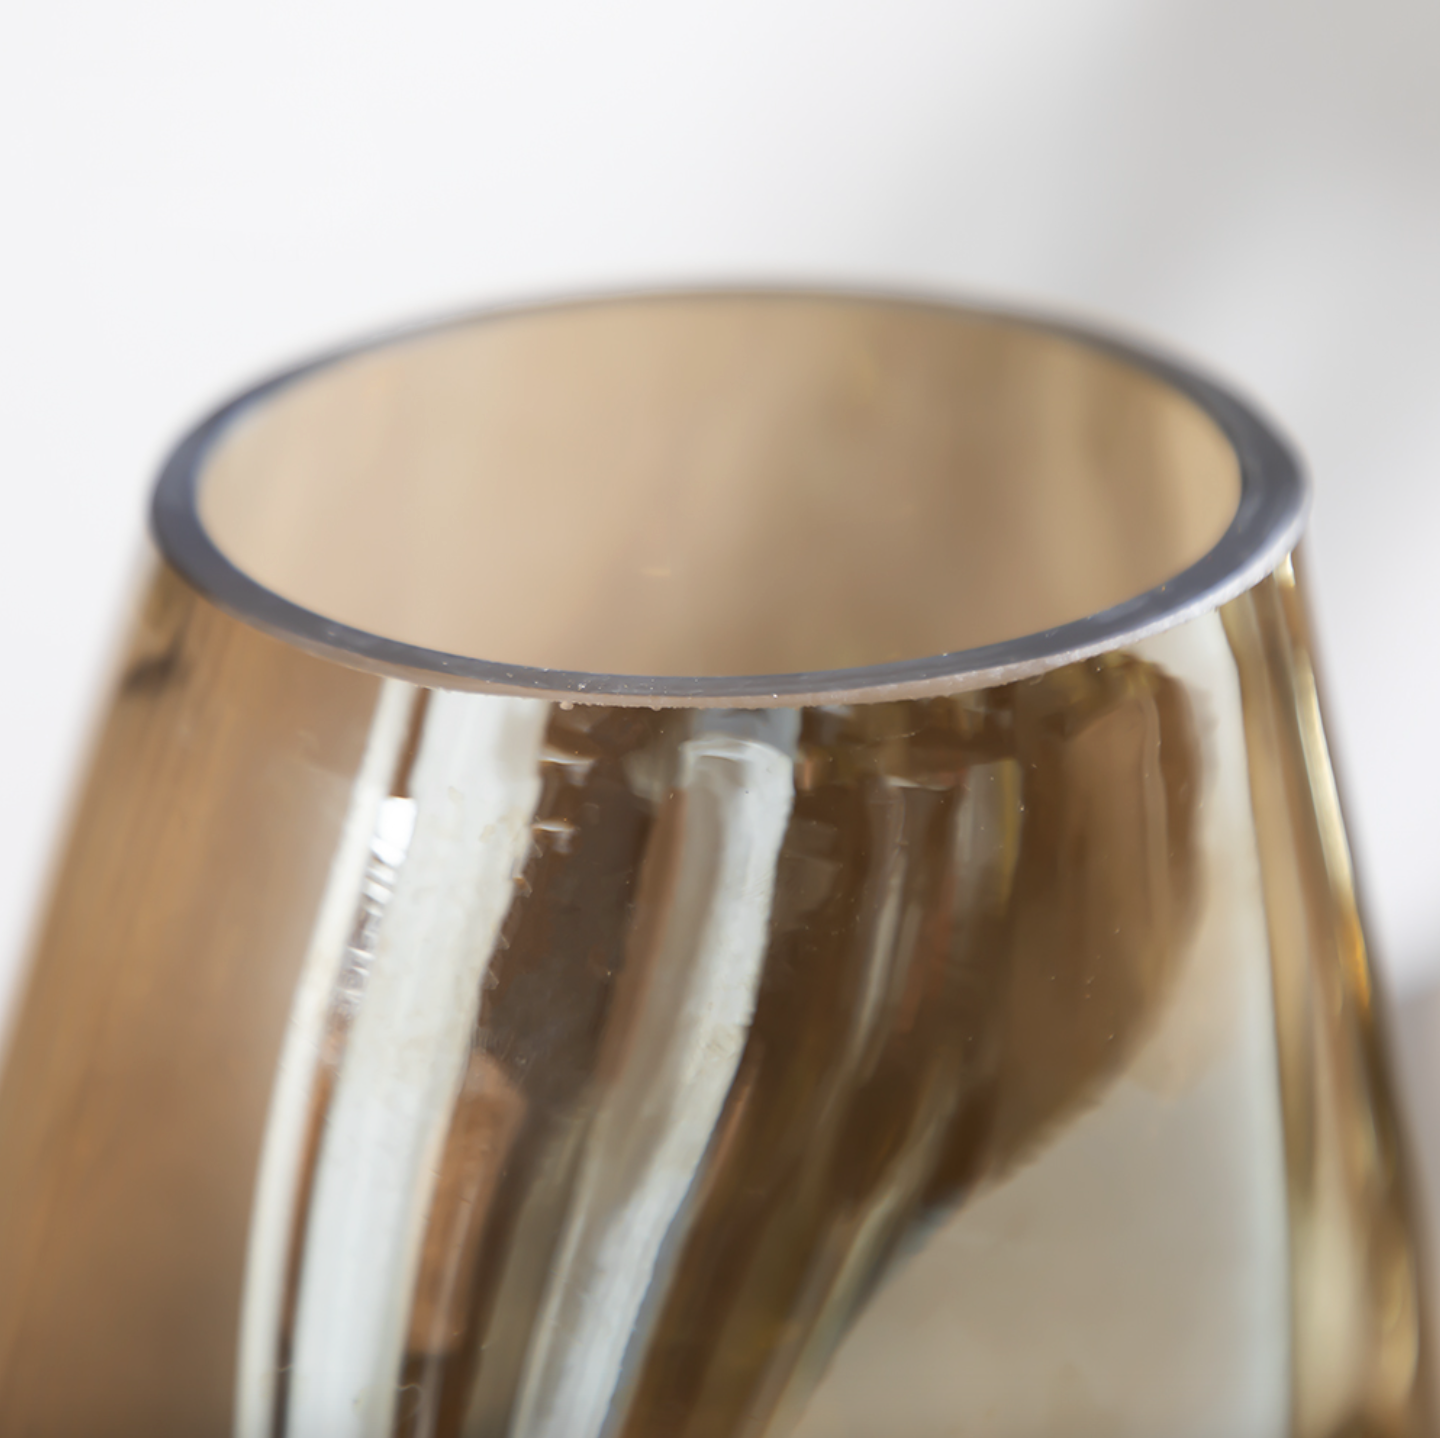 Glass Vase Decor Champagne